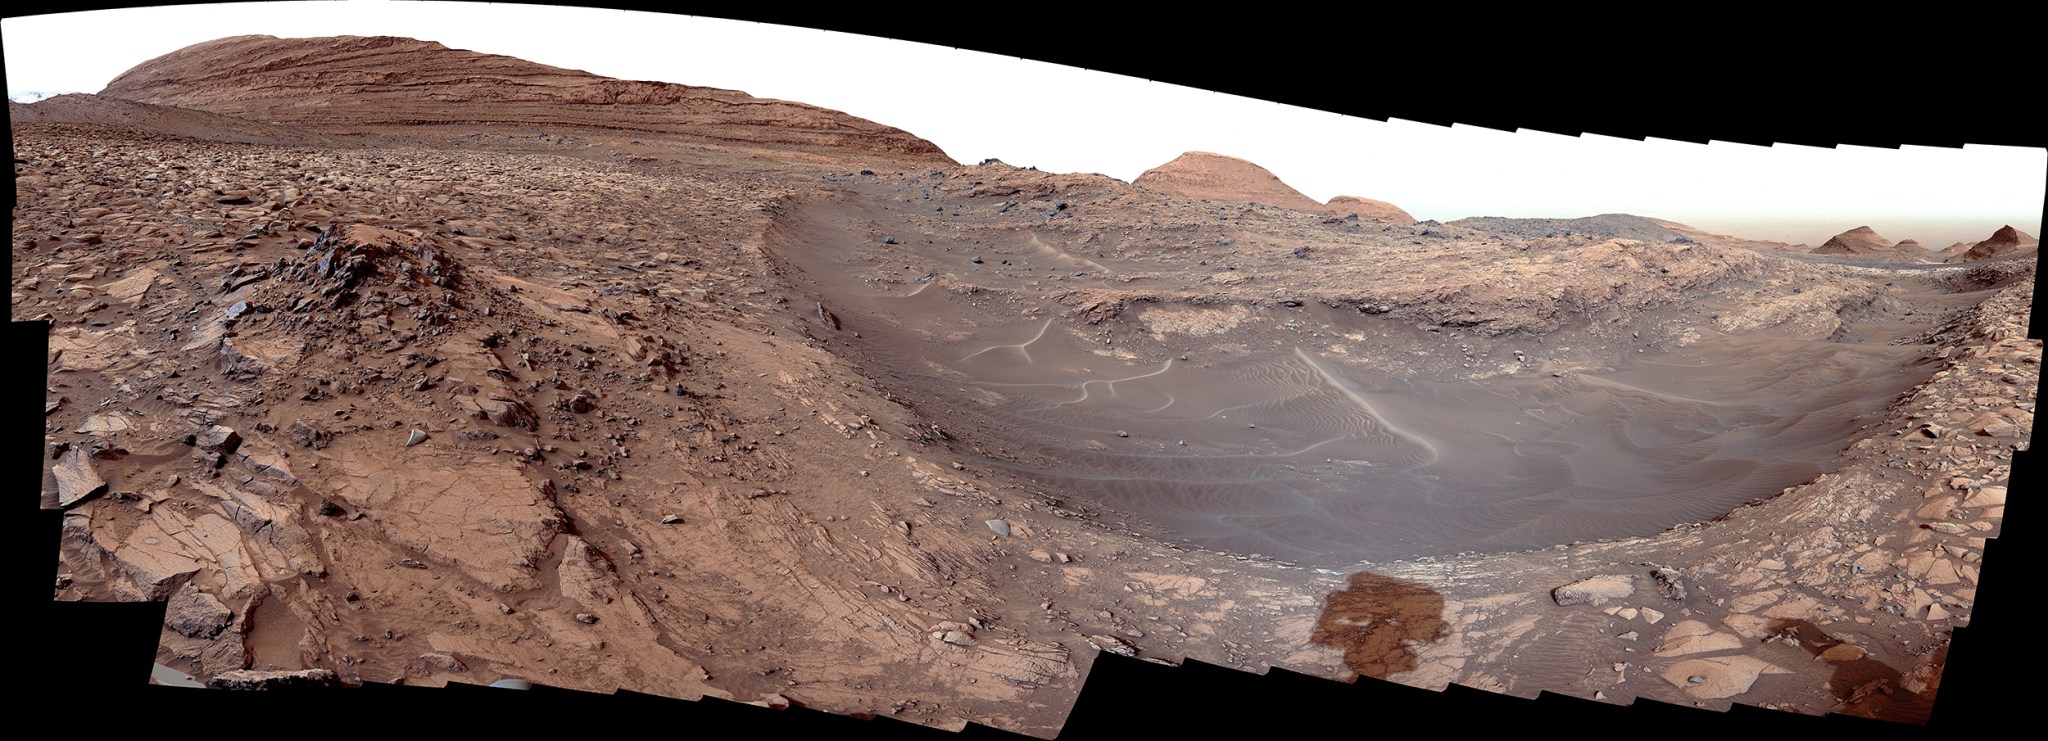 NASA’s Curiosity Mars rover captured this view of Gediz Vallis channel